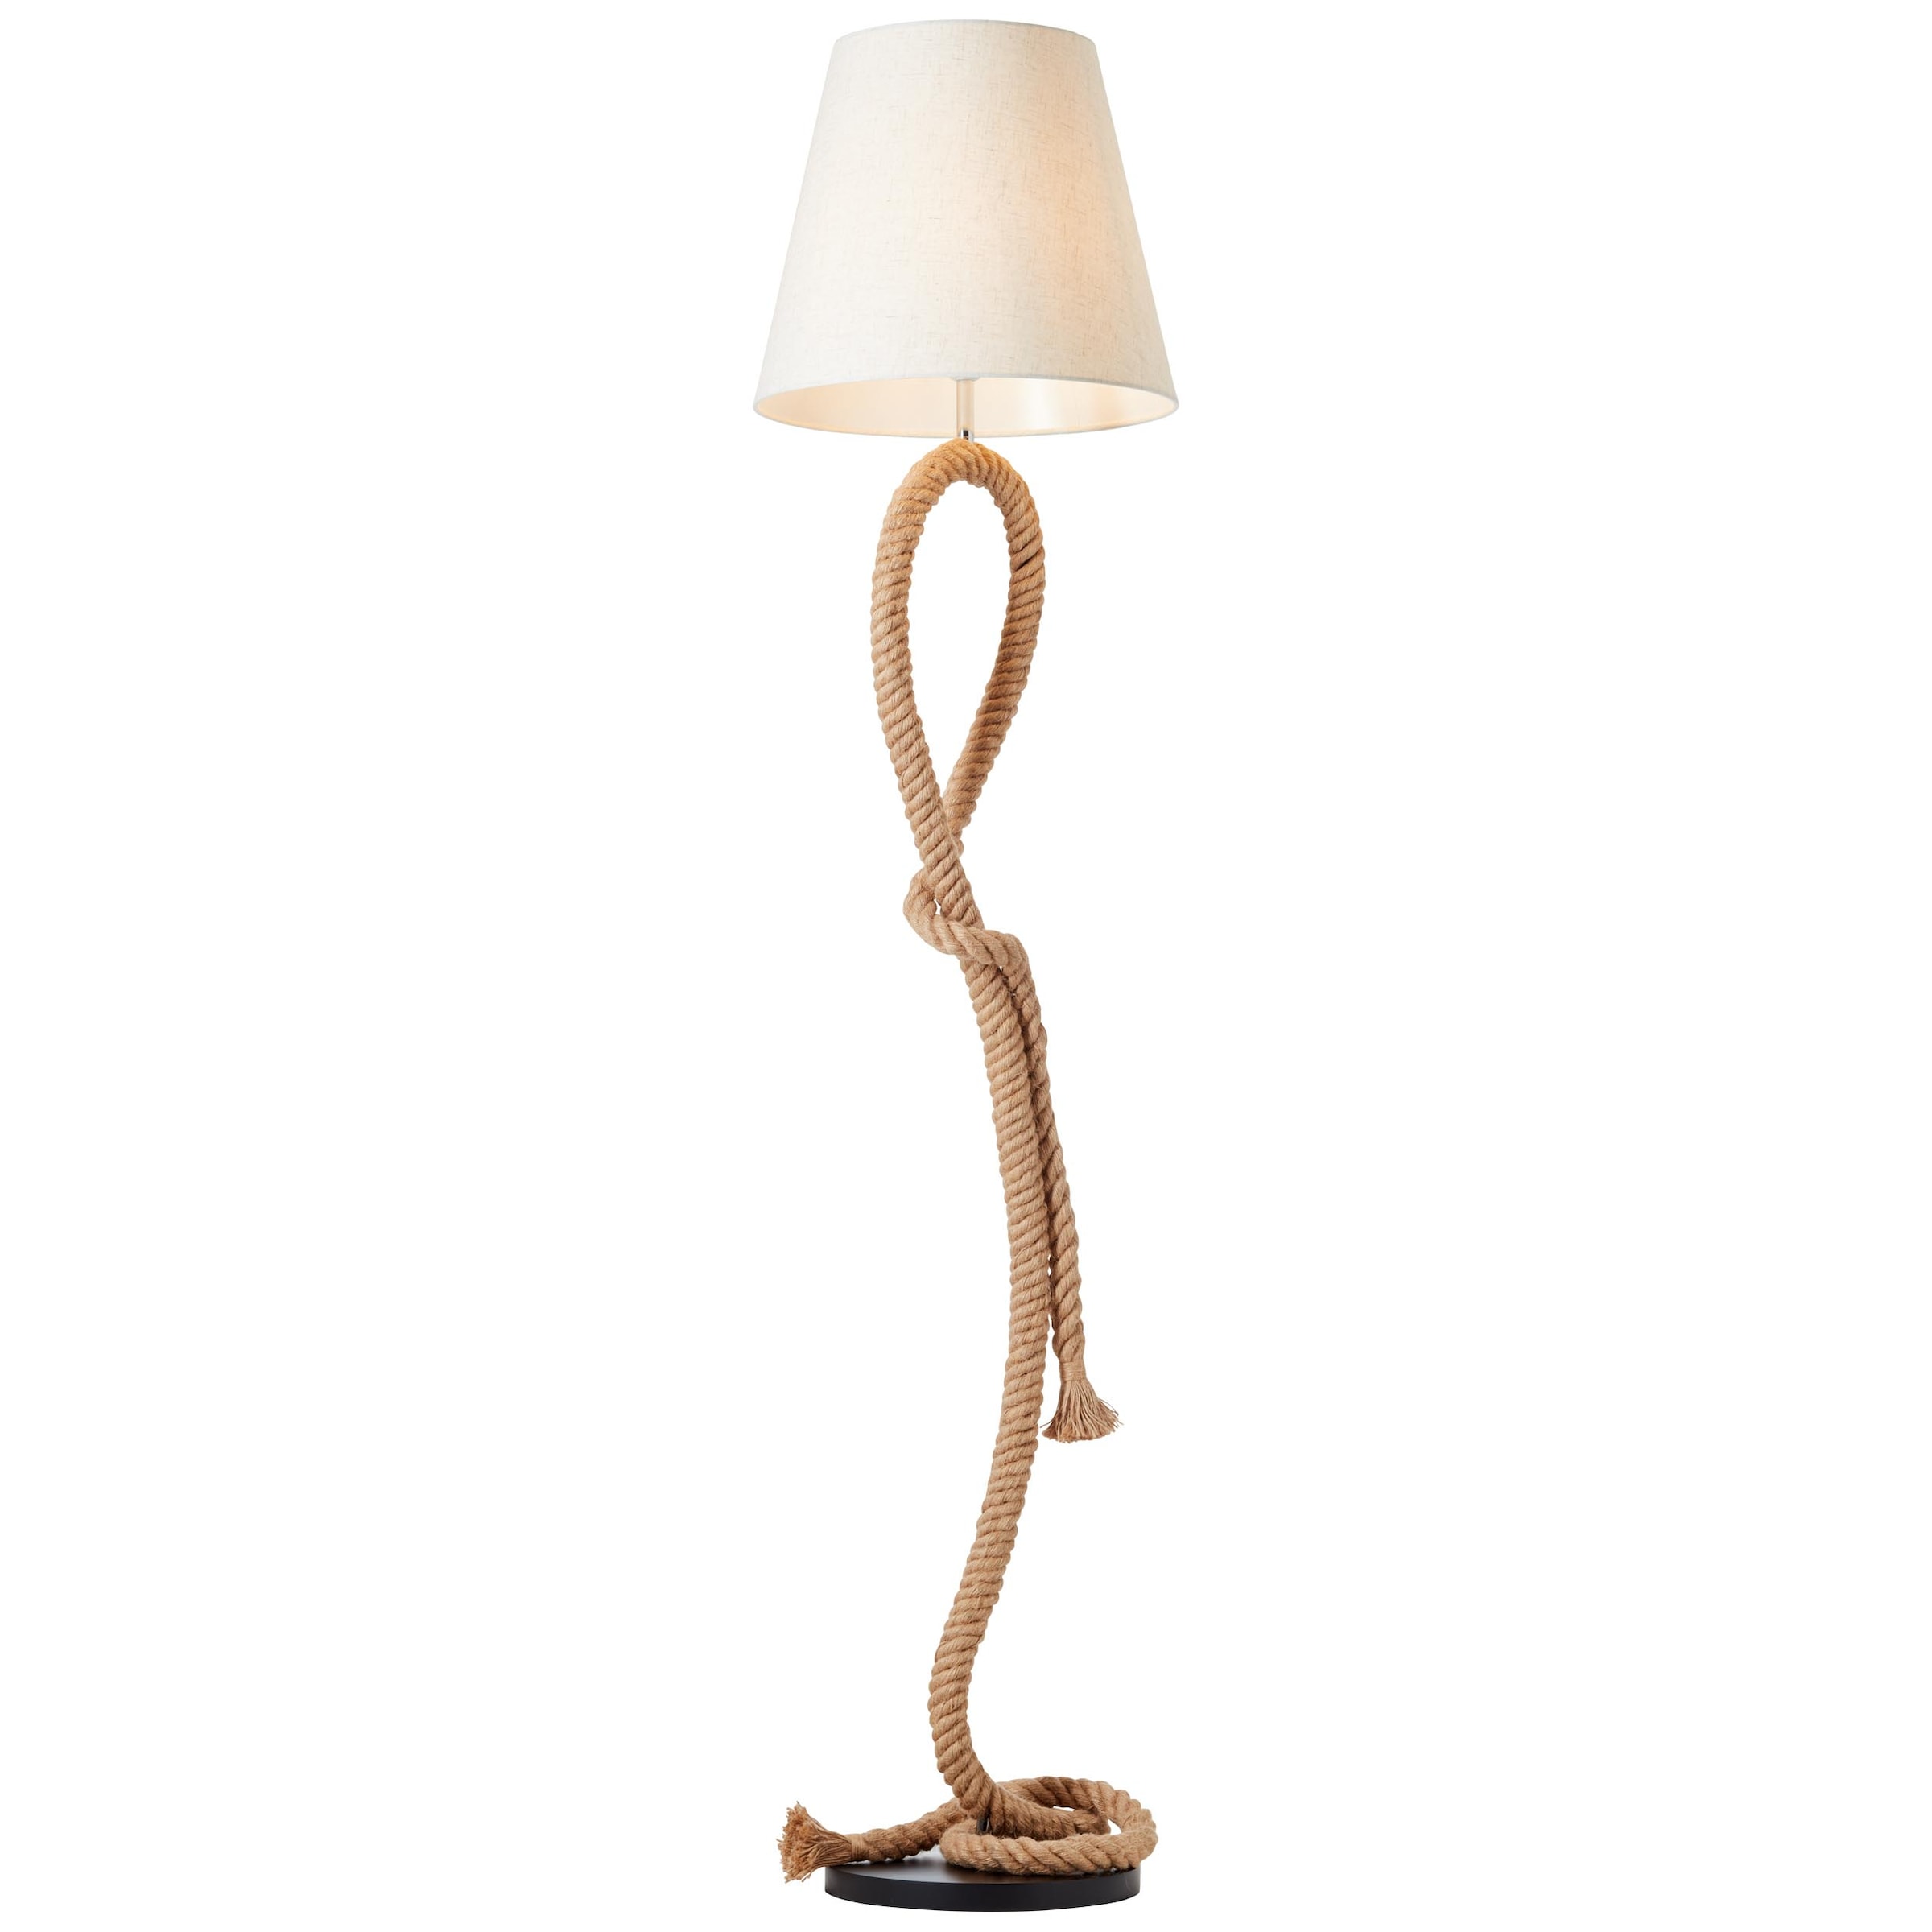 Brilliant Stehlampe »Sailor«, 1 flammig-flammig, 175 cm Höhe, Ø 40 cm, E27, Seil/Textil/Metall, natur/weiss